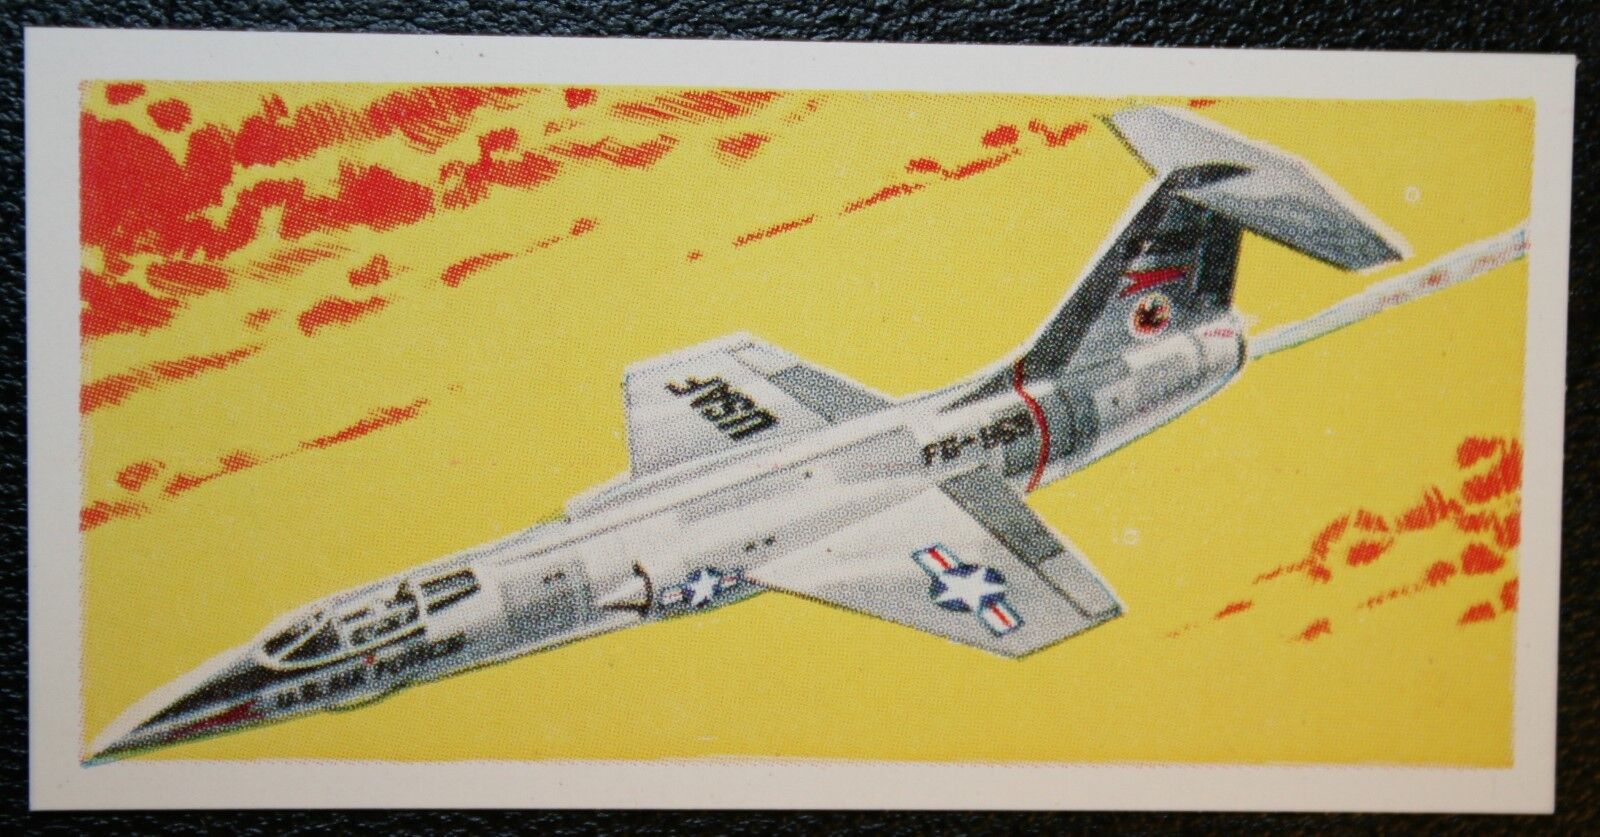 LOCKHEED F-104A STARFIGHTER  Jet Fighter   Original 1960's Vintage Card  QC27M